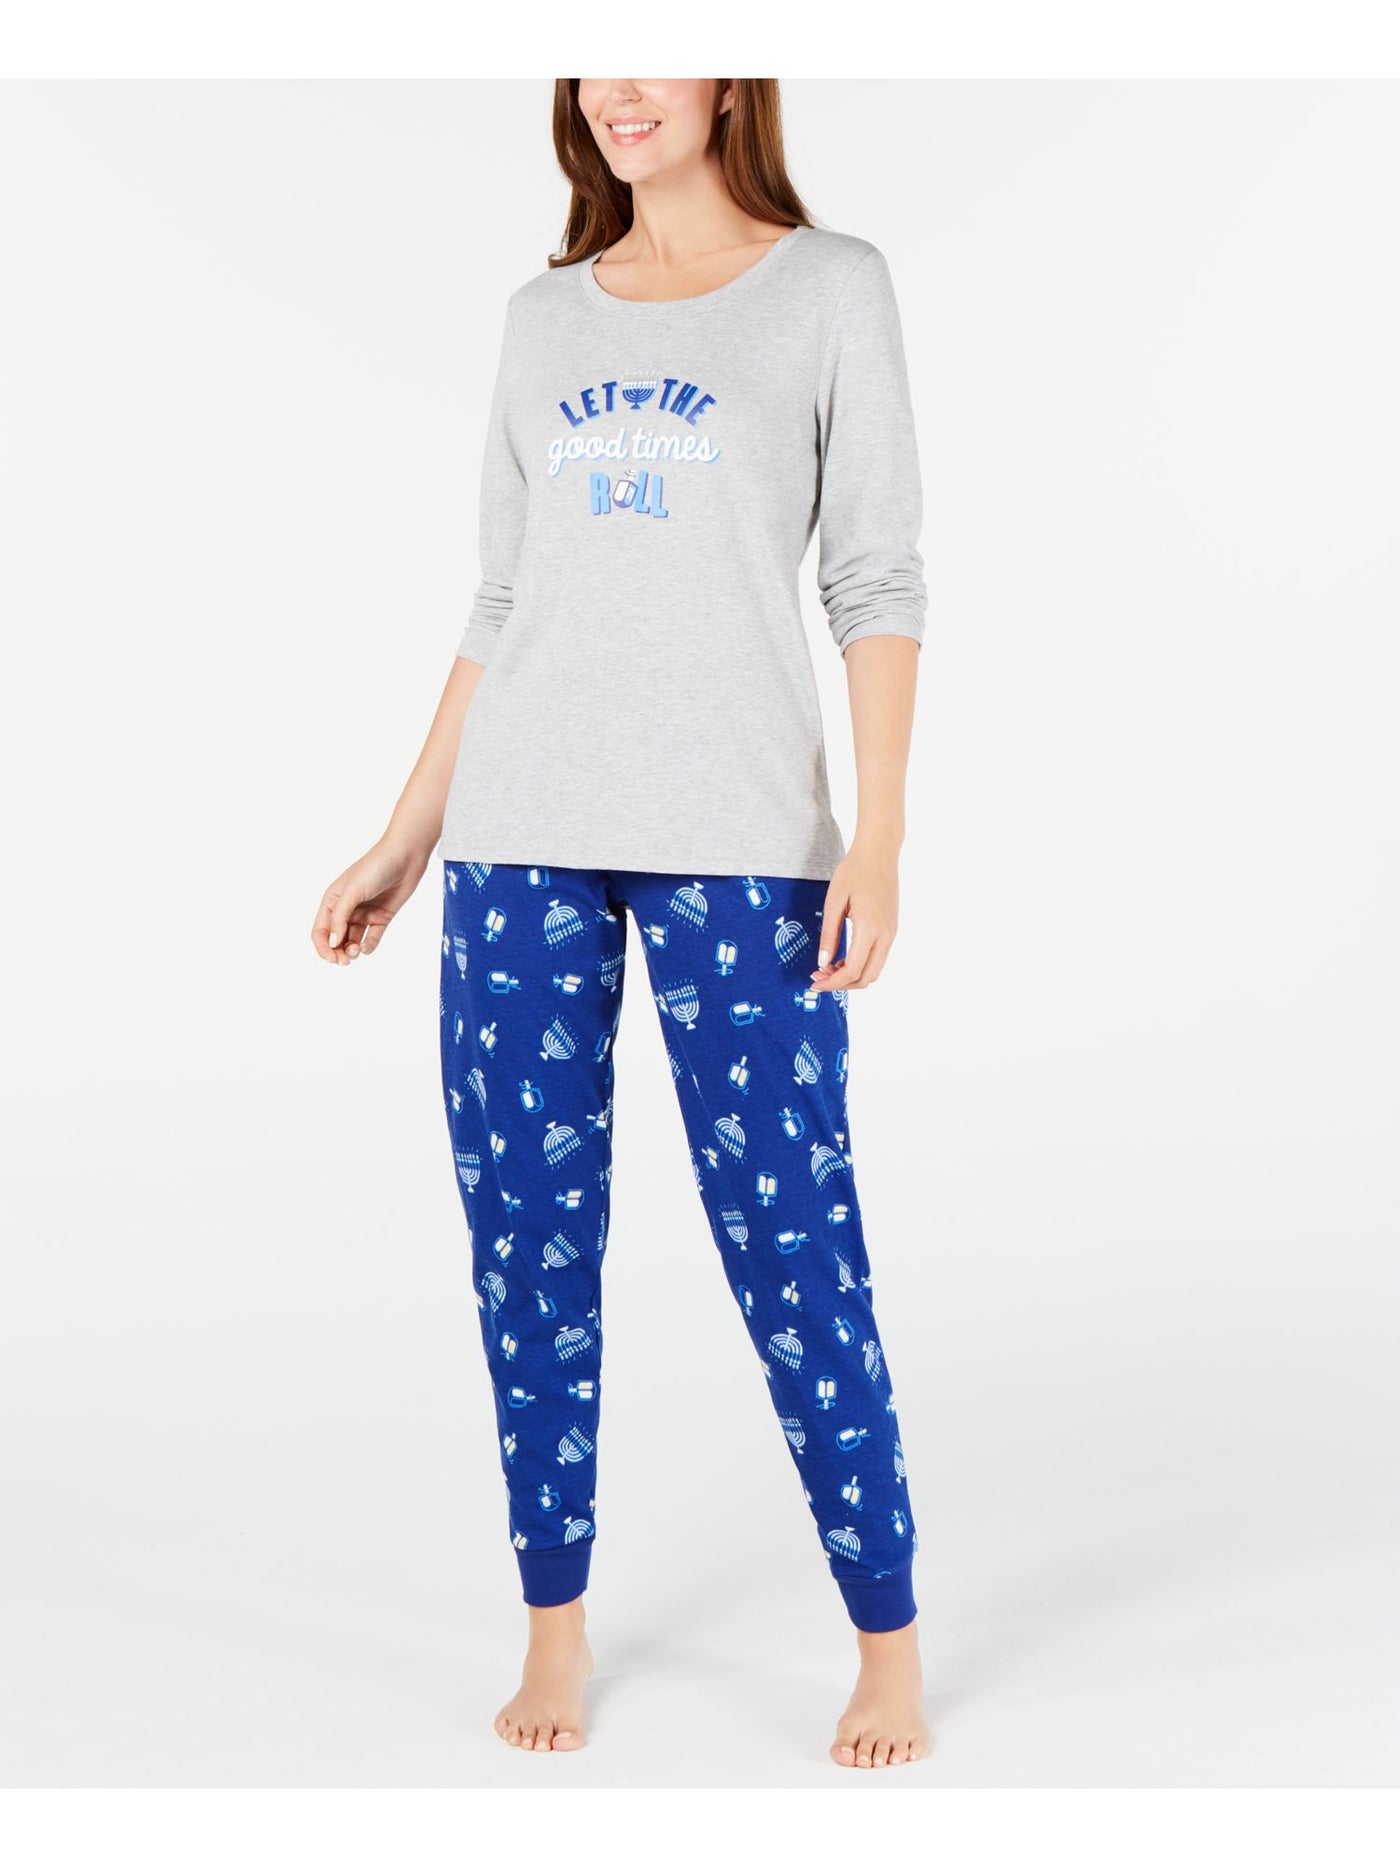 FAMILY PJs Womens Blue Printed Long Sleeve T-Shirt Top Lounge Pants Pajamas M